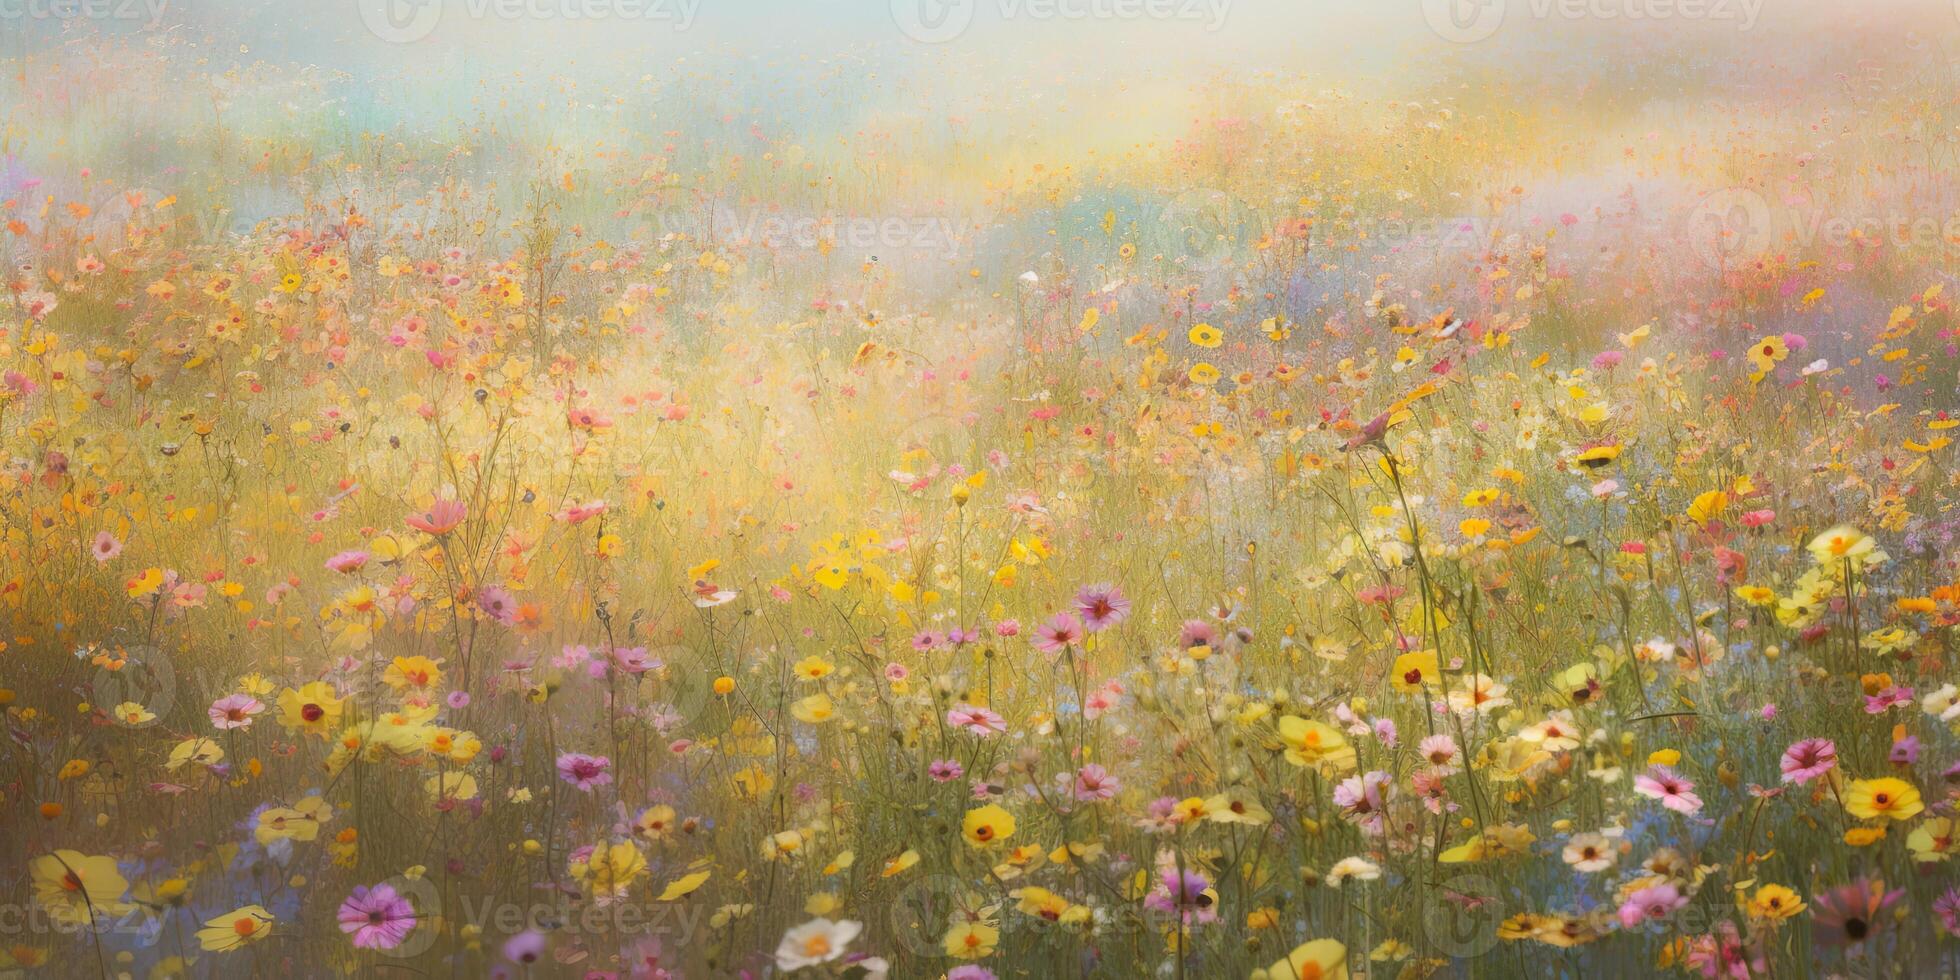 . . Wild flowers spring outdoor field. Romantic nature lover love aesthetics vibe. Graphic Art photo